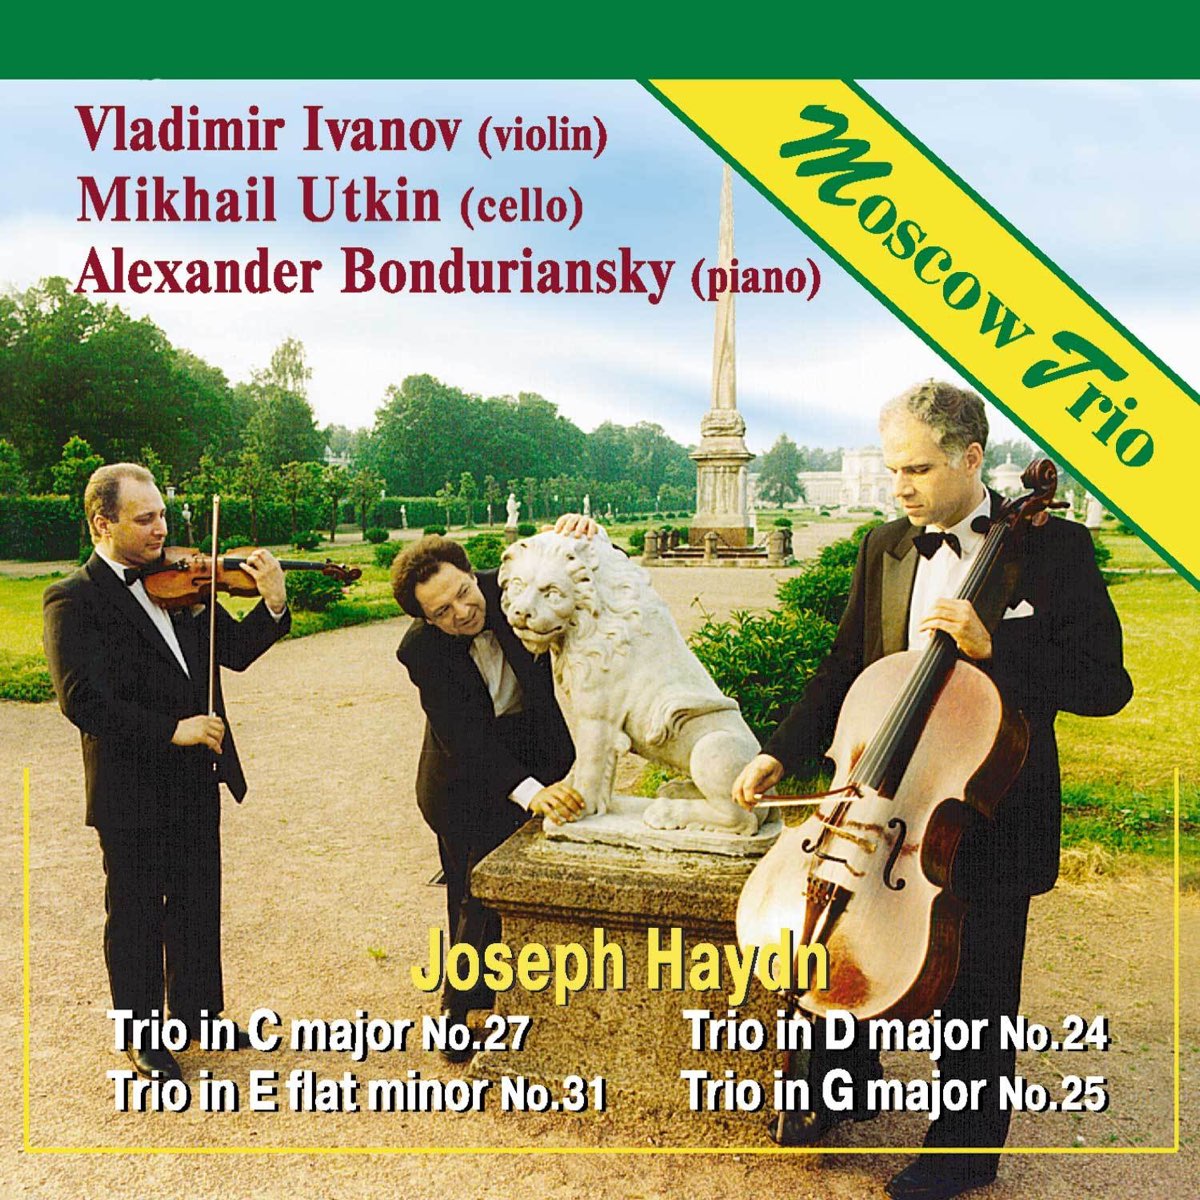 Haydn Trio Eisenstadt. Московское трио Уткин. Гайдн трио три. Московские голоса трио. Московское трио